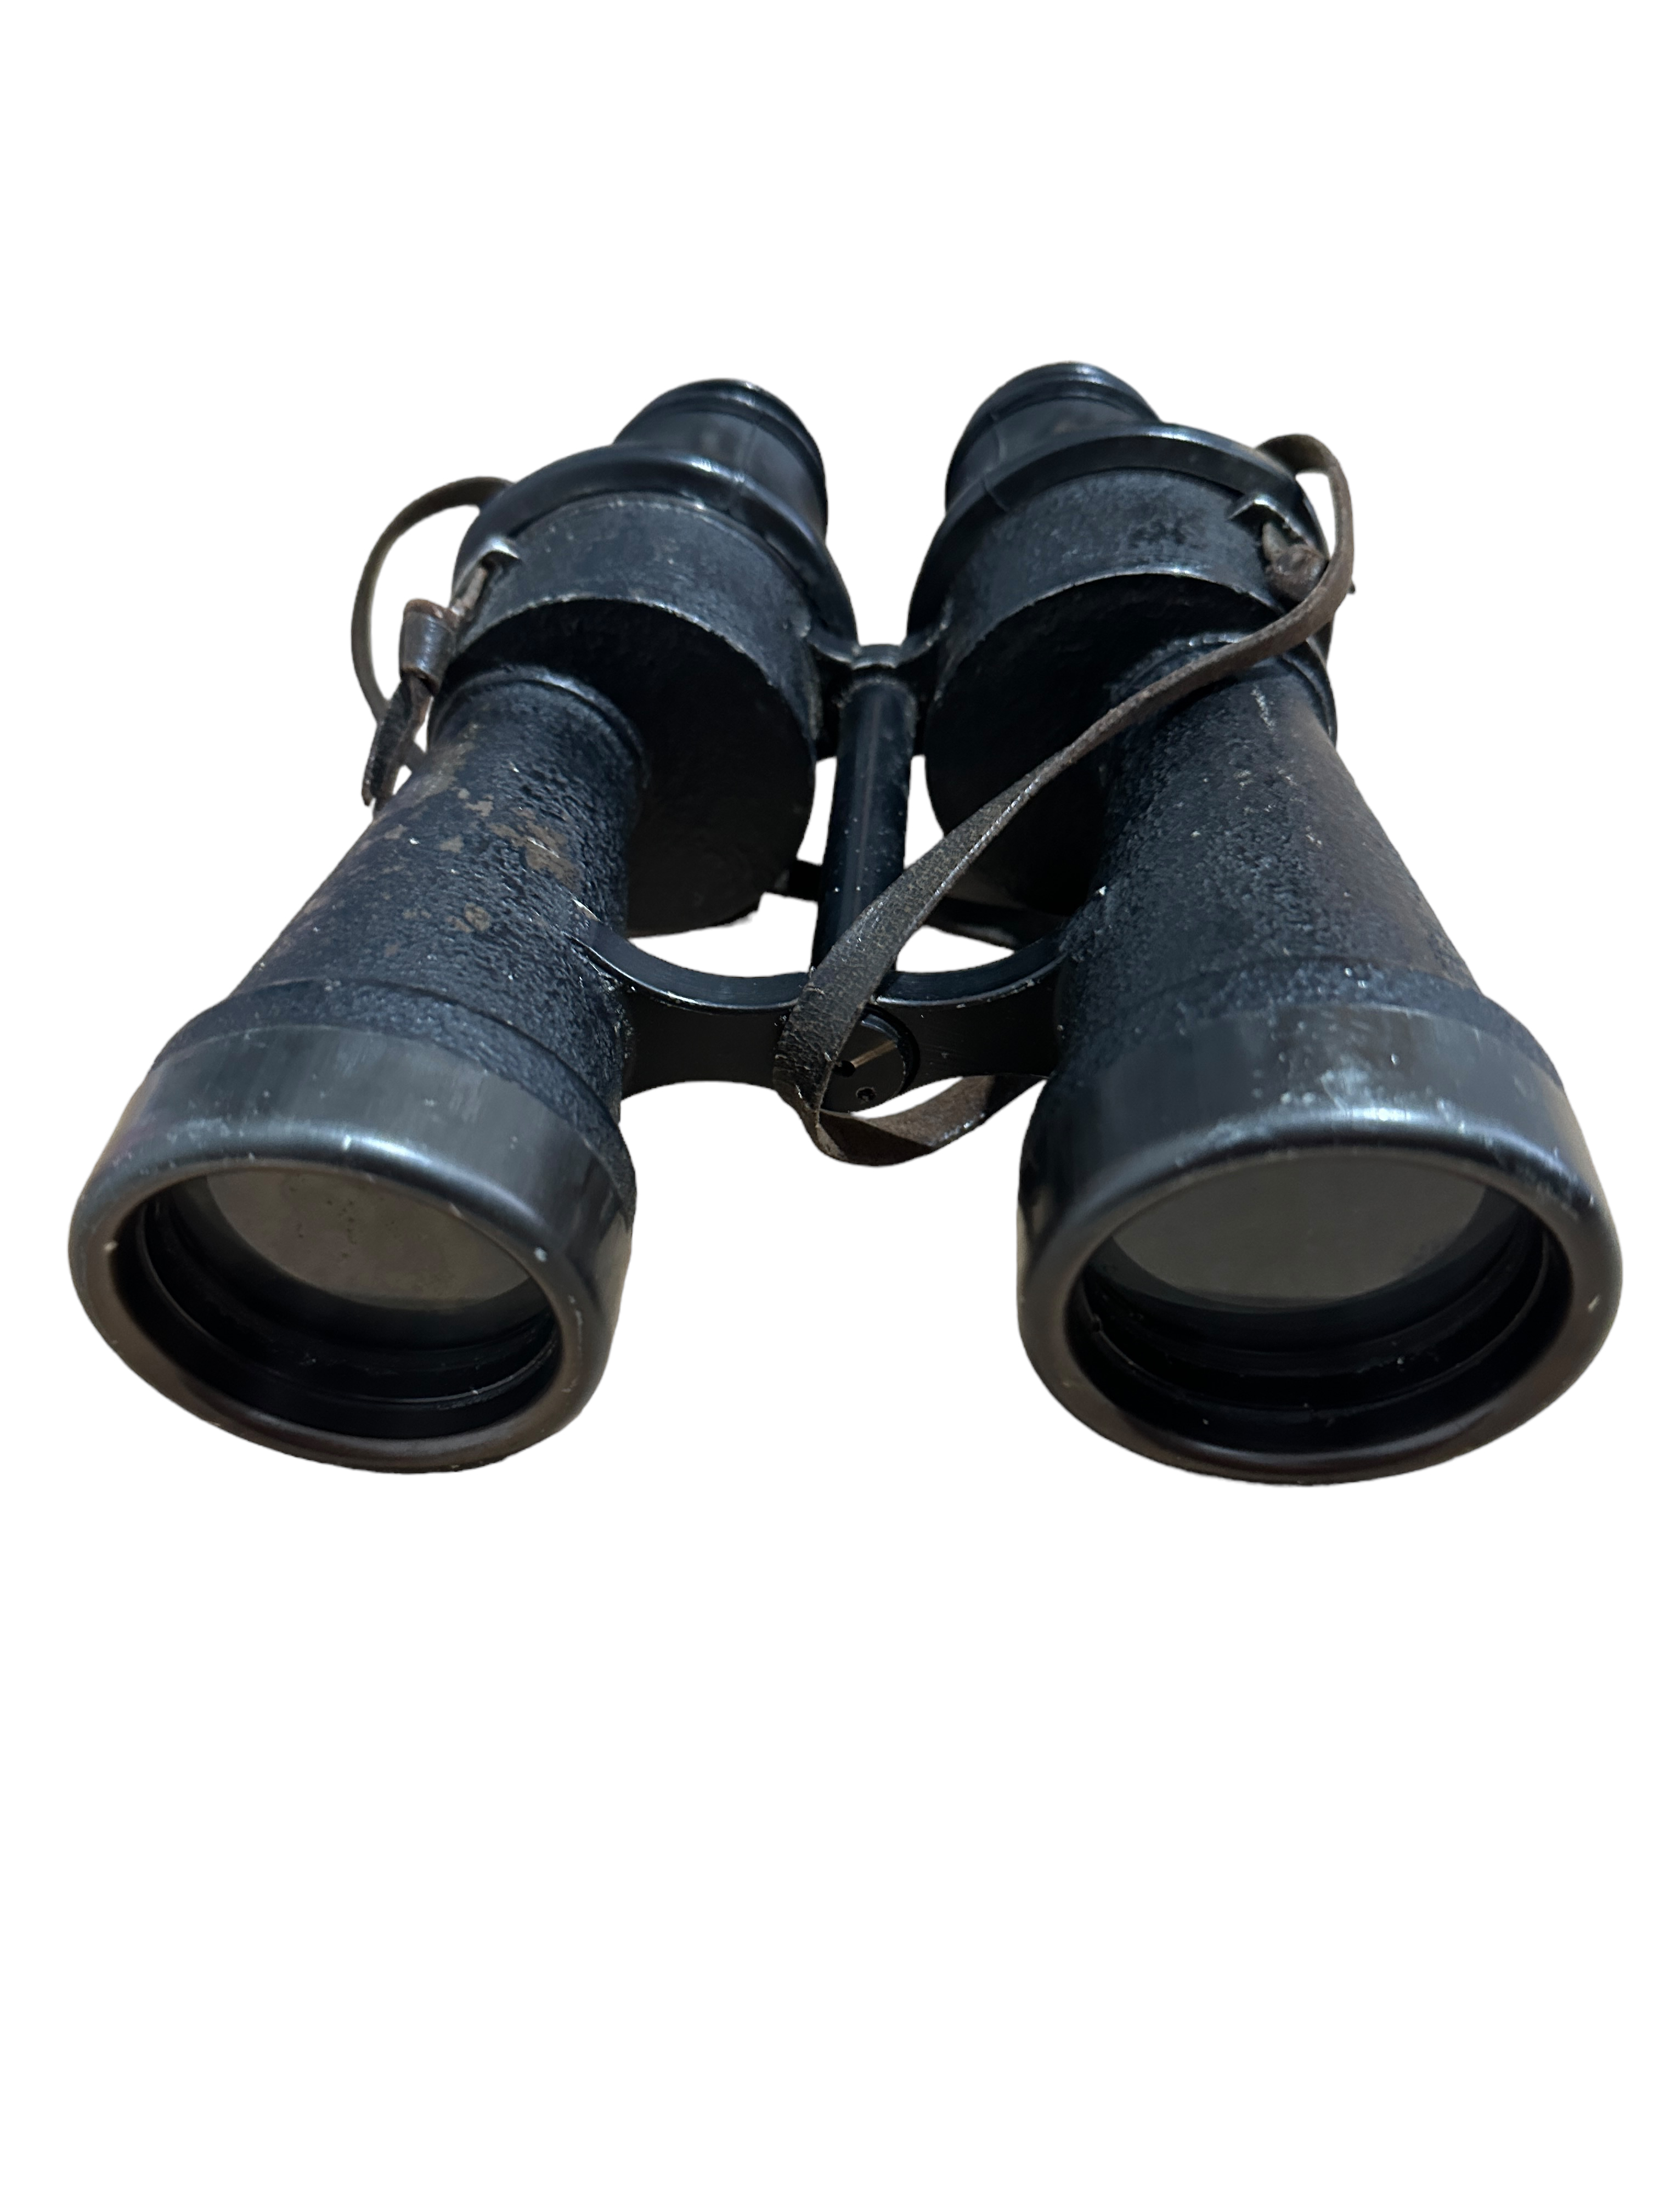 Vintage Pair of Cased of 1944 beh 7x50 German Binoculars with covers and cap lenses. - Image 10 of 18